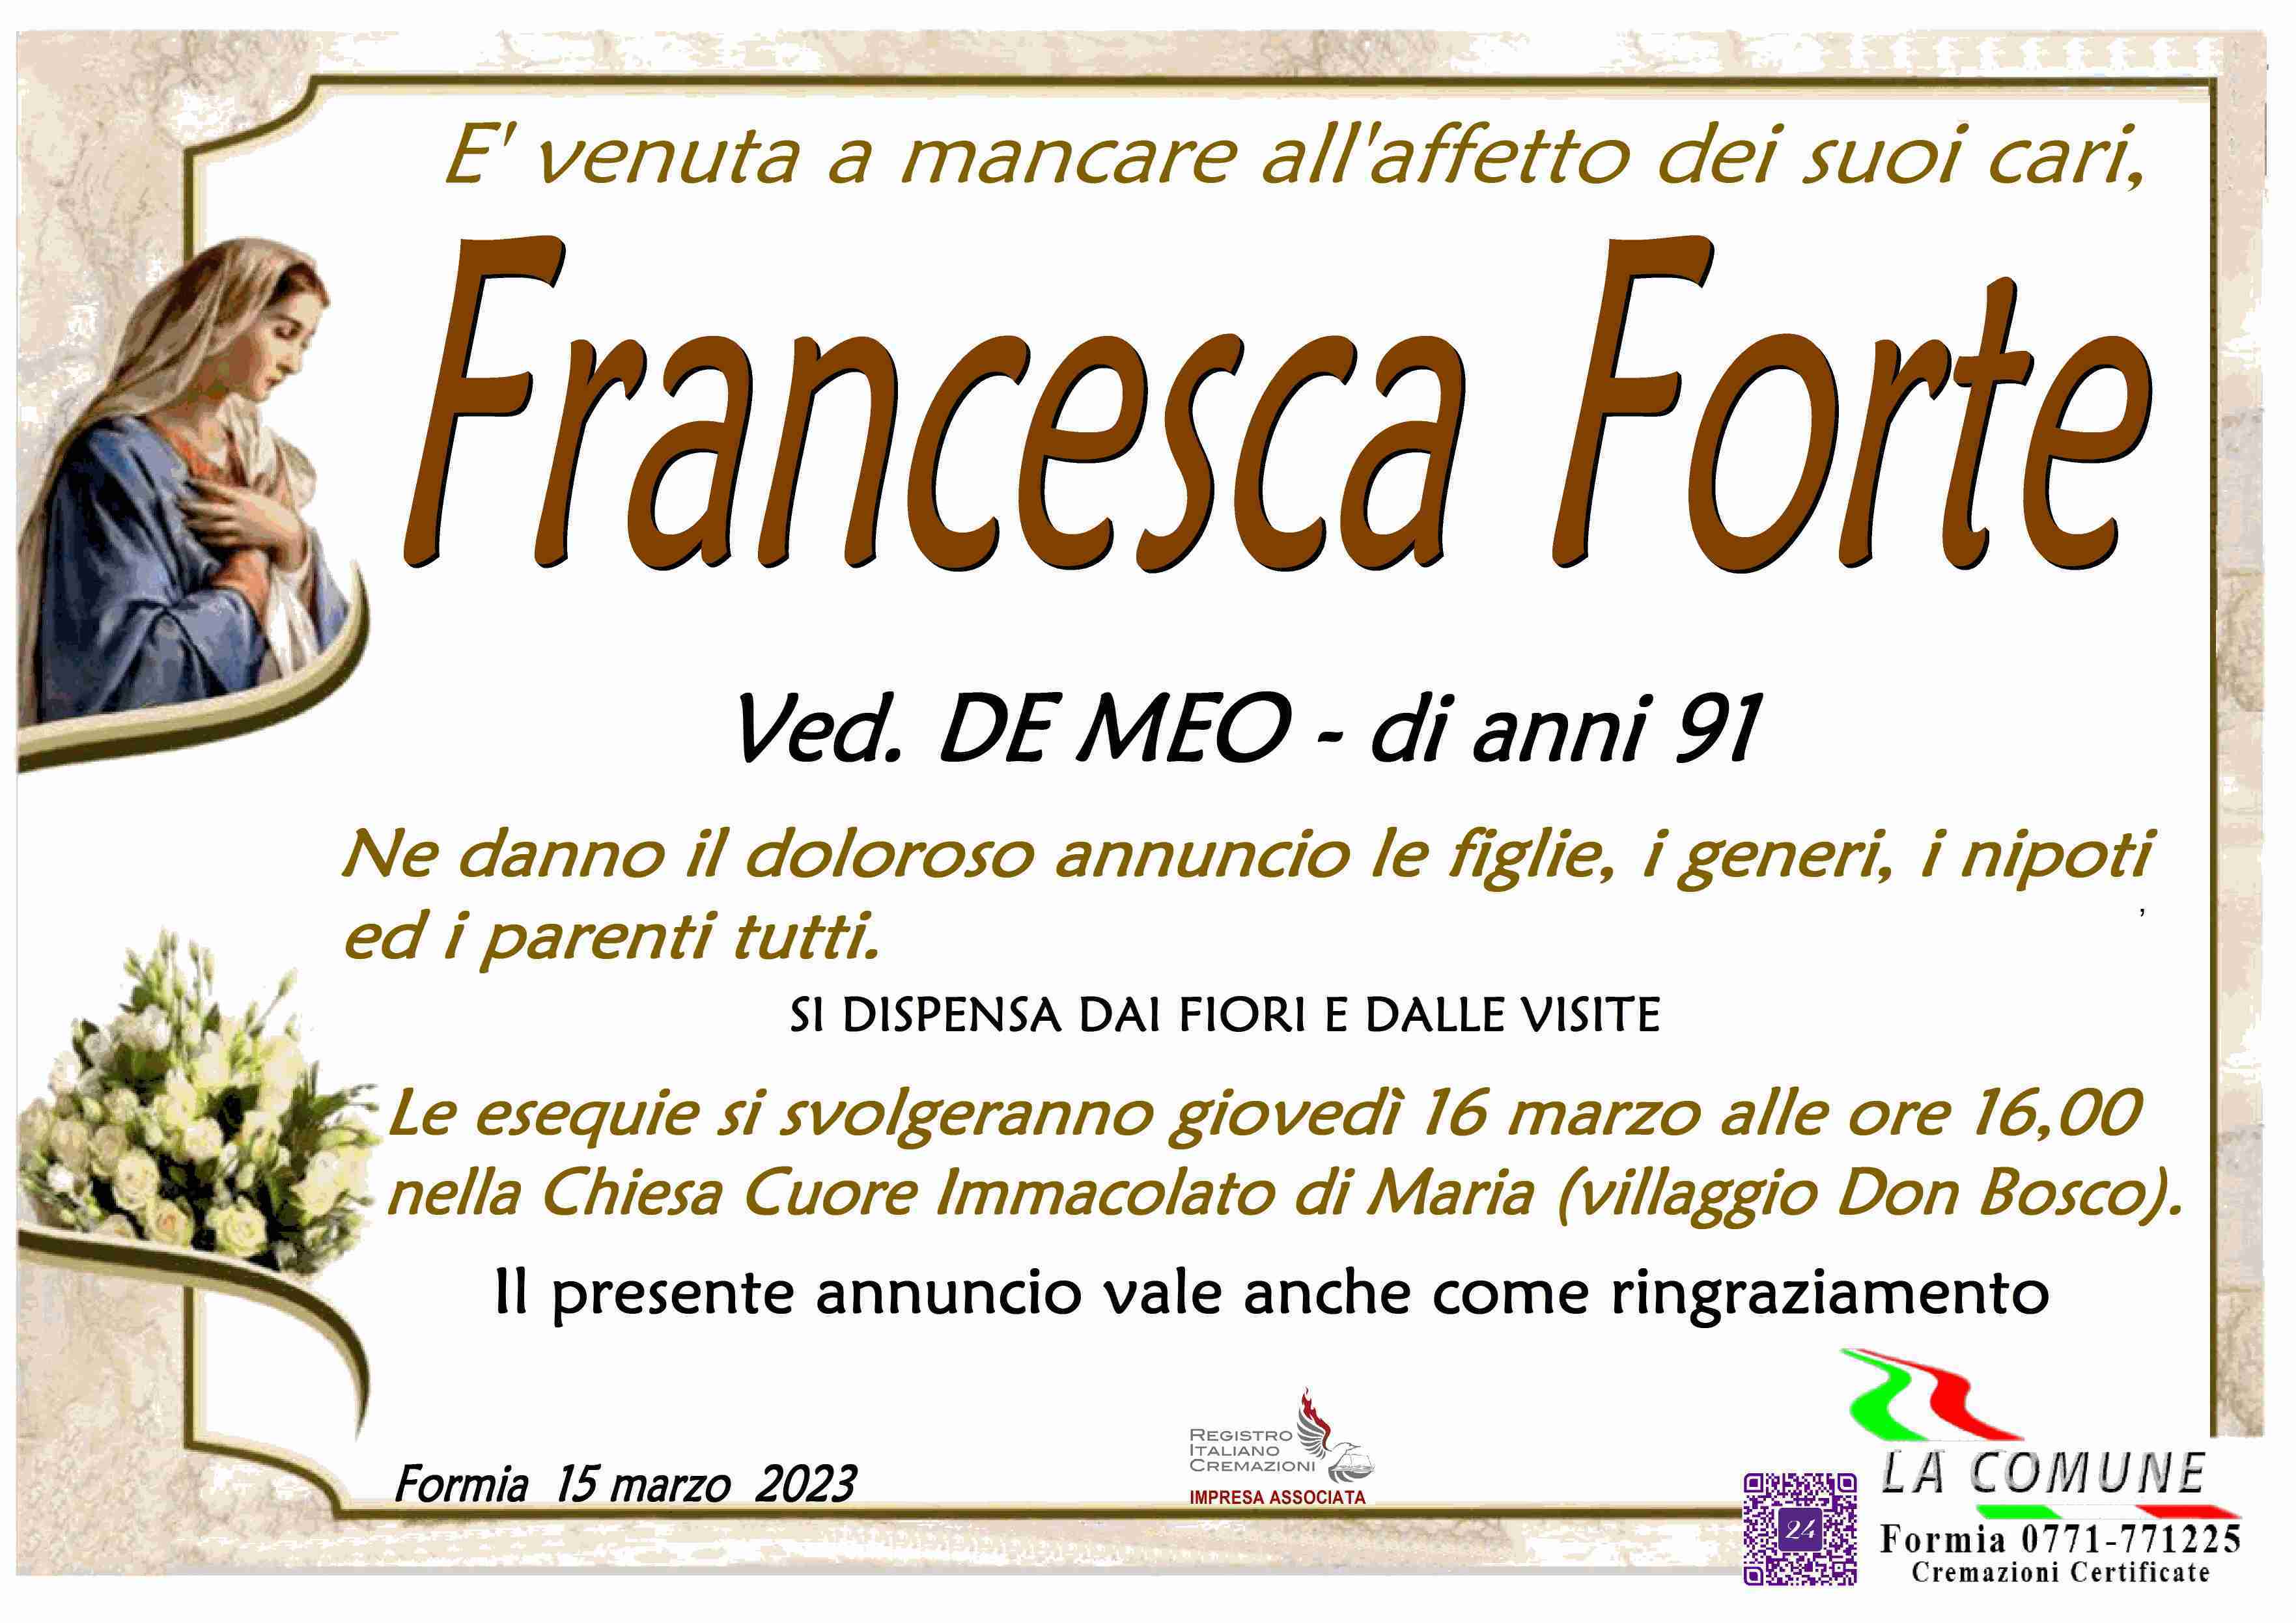 Francesca Forte